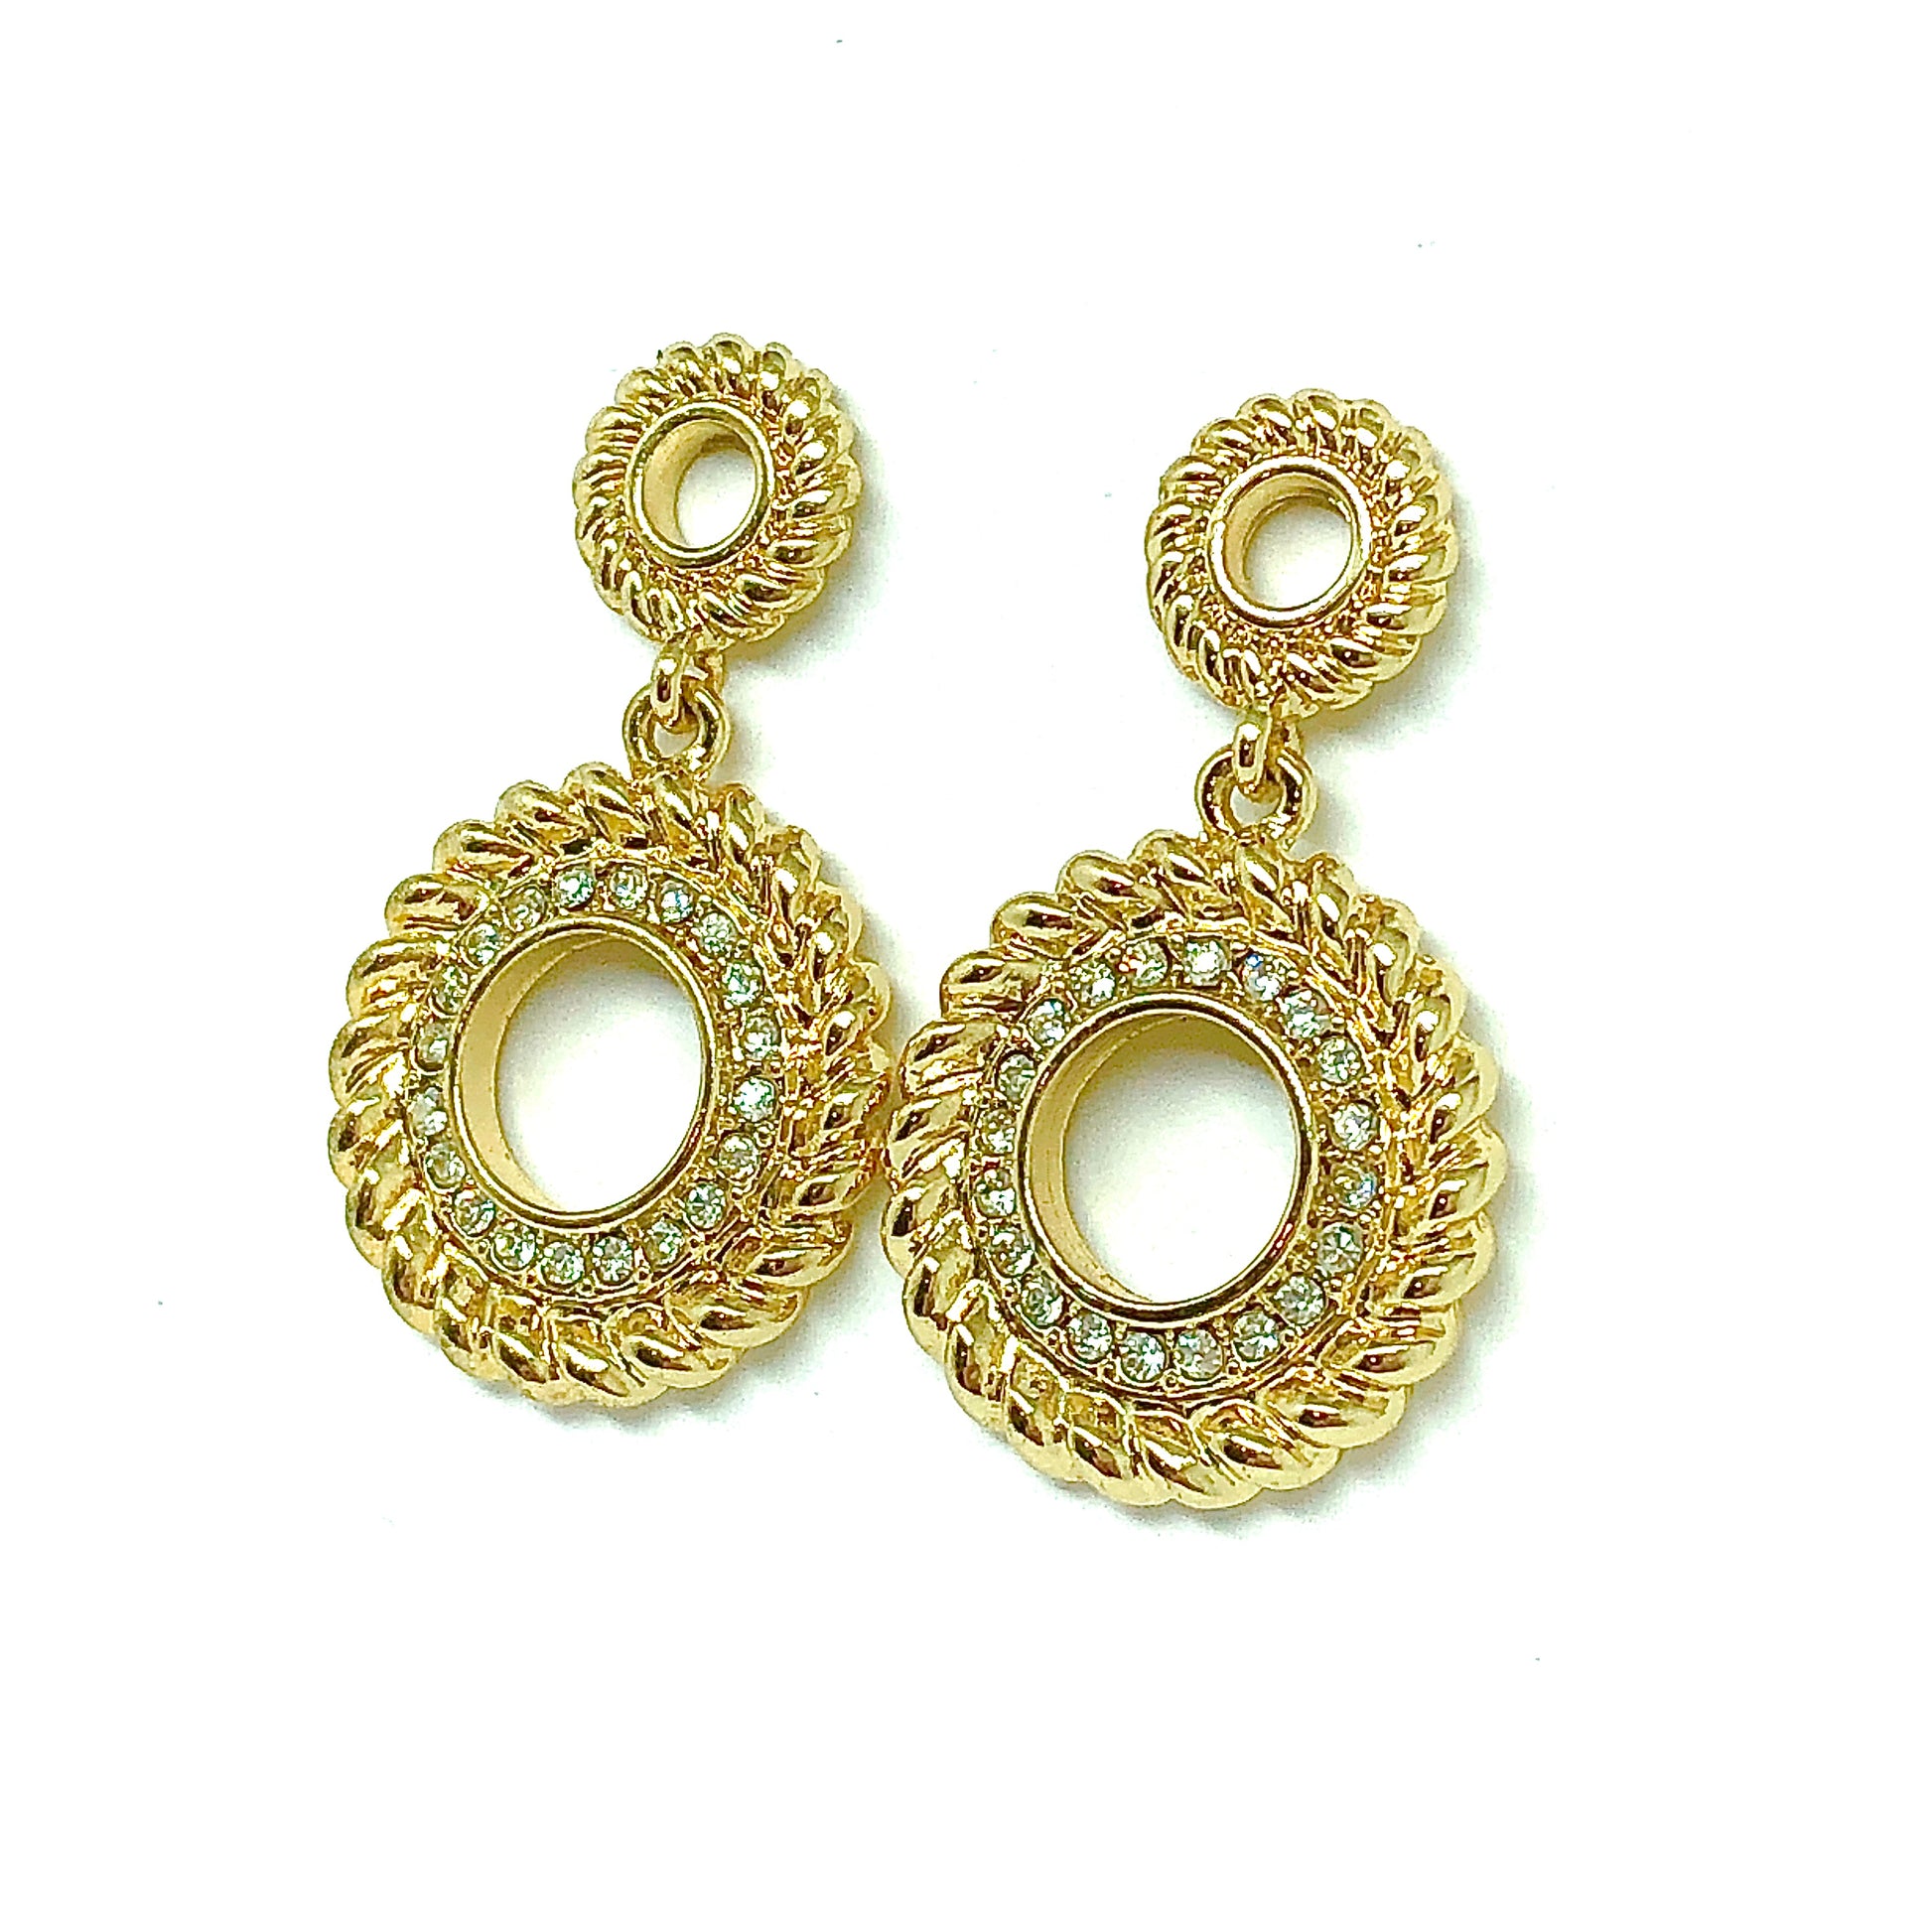 Fancy Gold Sparkling cz Halo Circle Style Dangle Earrings - Blingschlingers